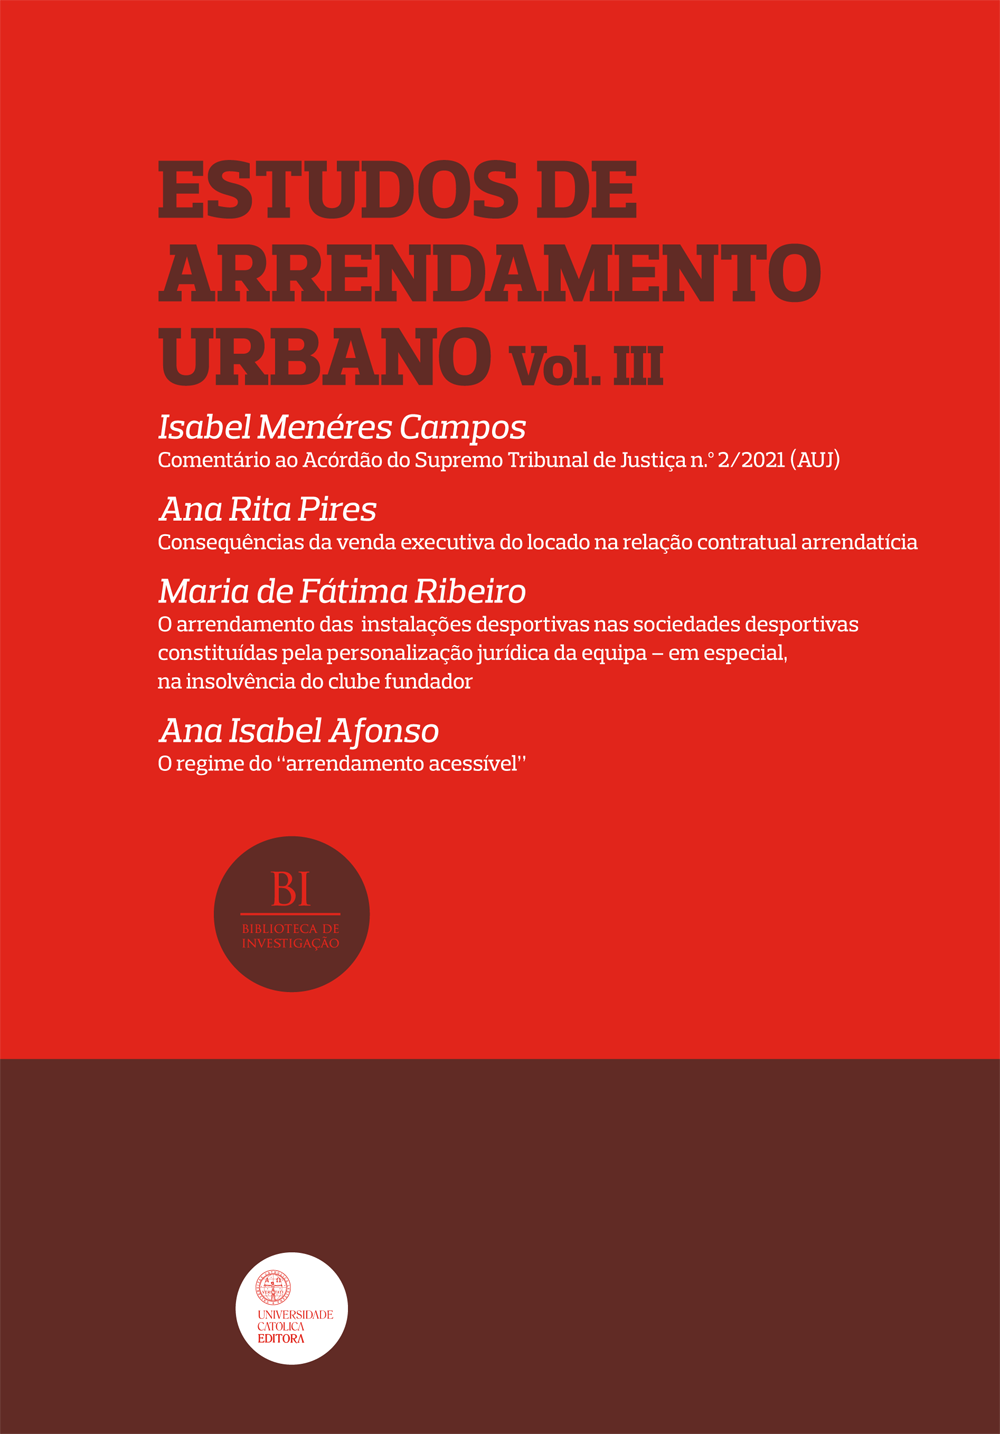 ESTUDOS DE ARRENDAMENTO URBANO - Volume III